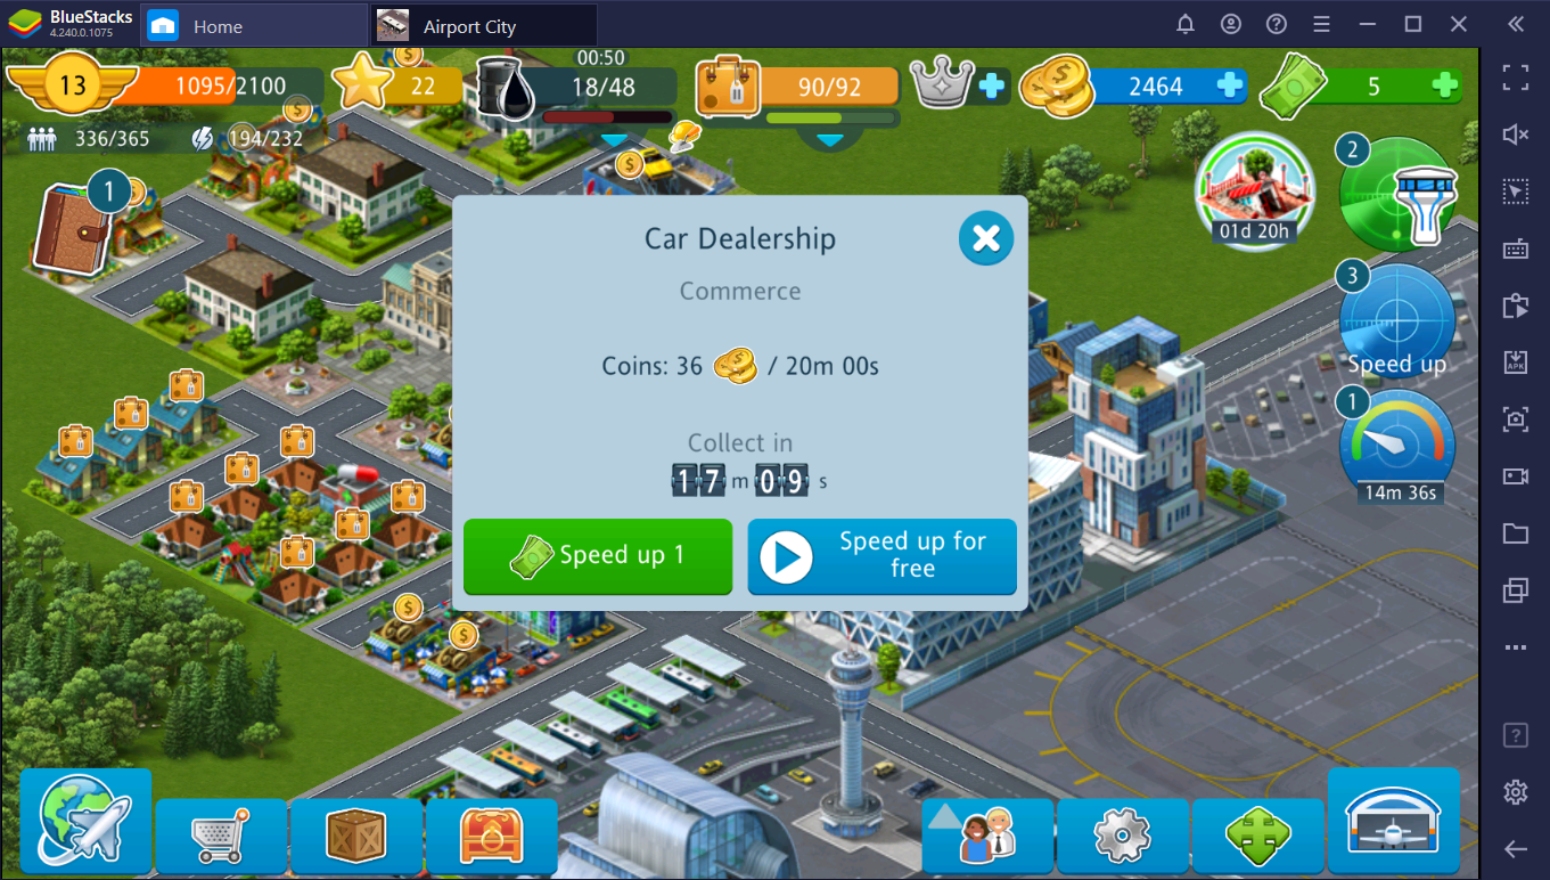 download game airport city offline